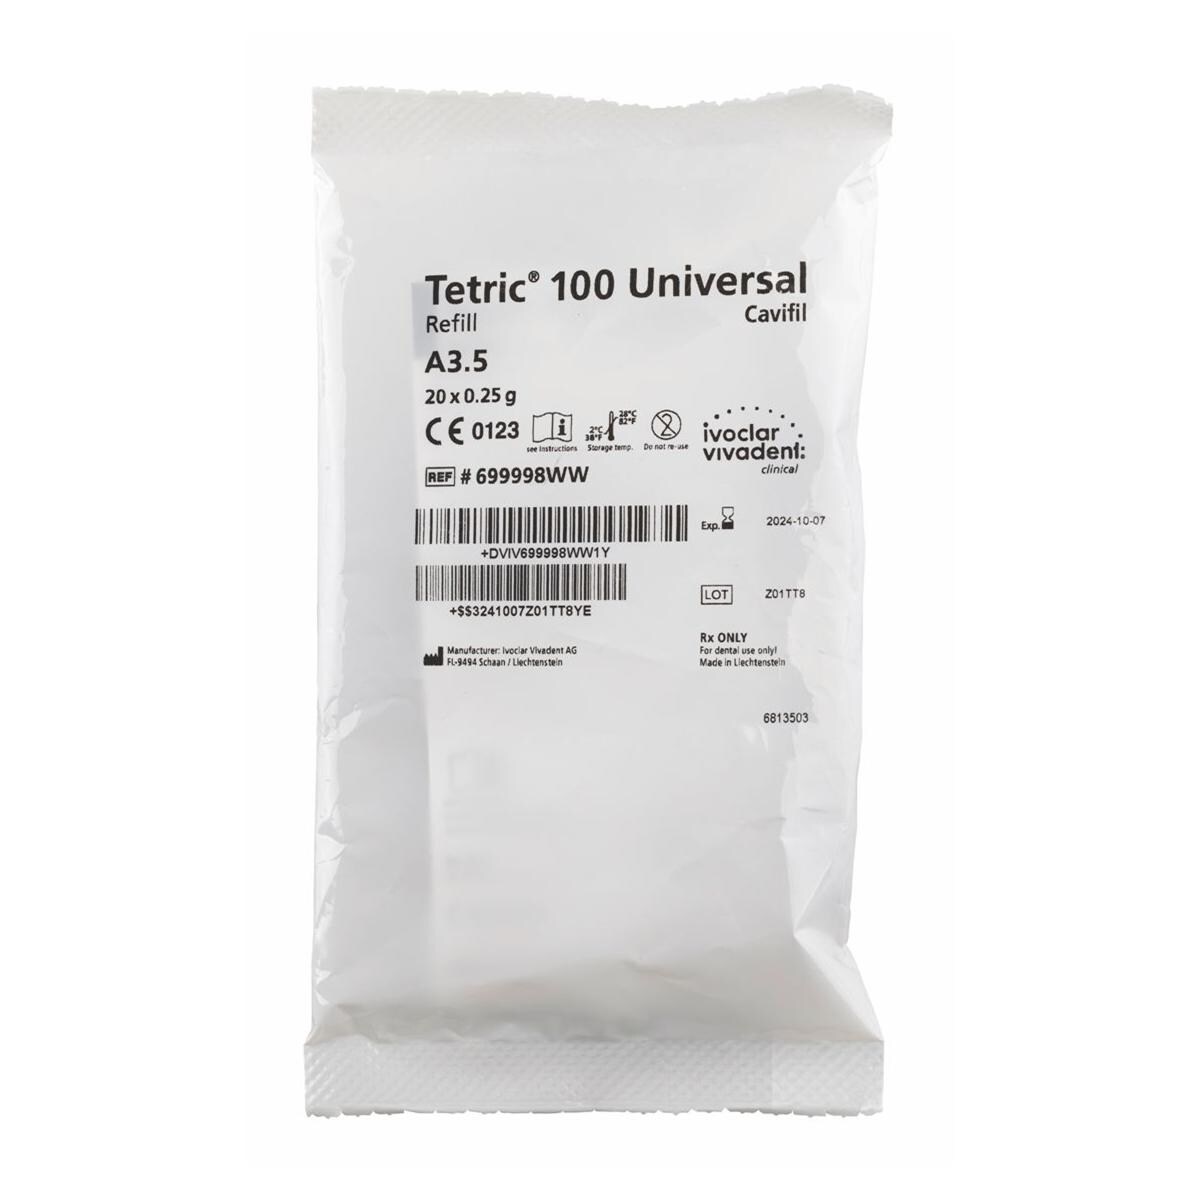 Tetric 100 Universal Refill A3.5 0.25g 20pk